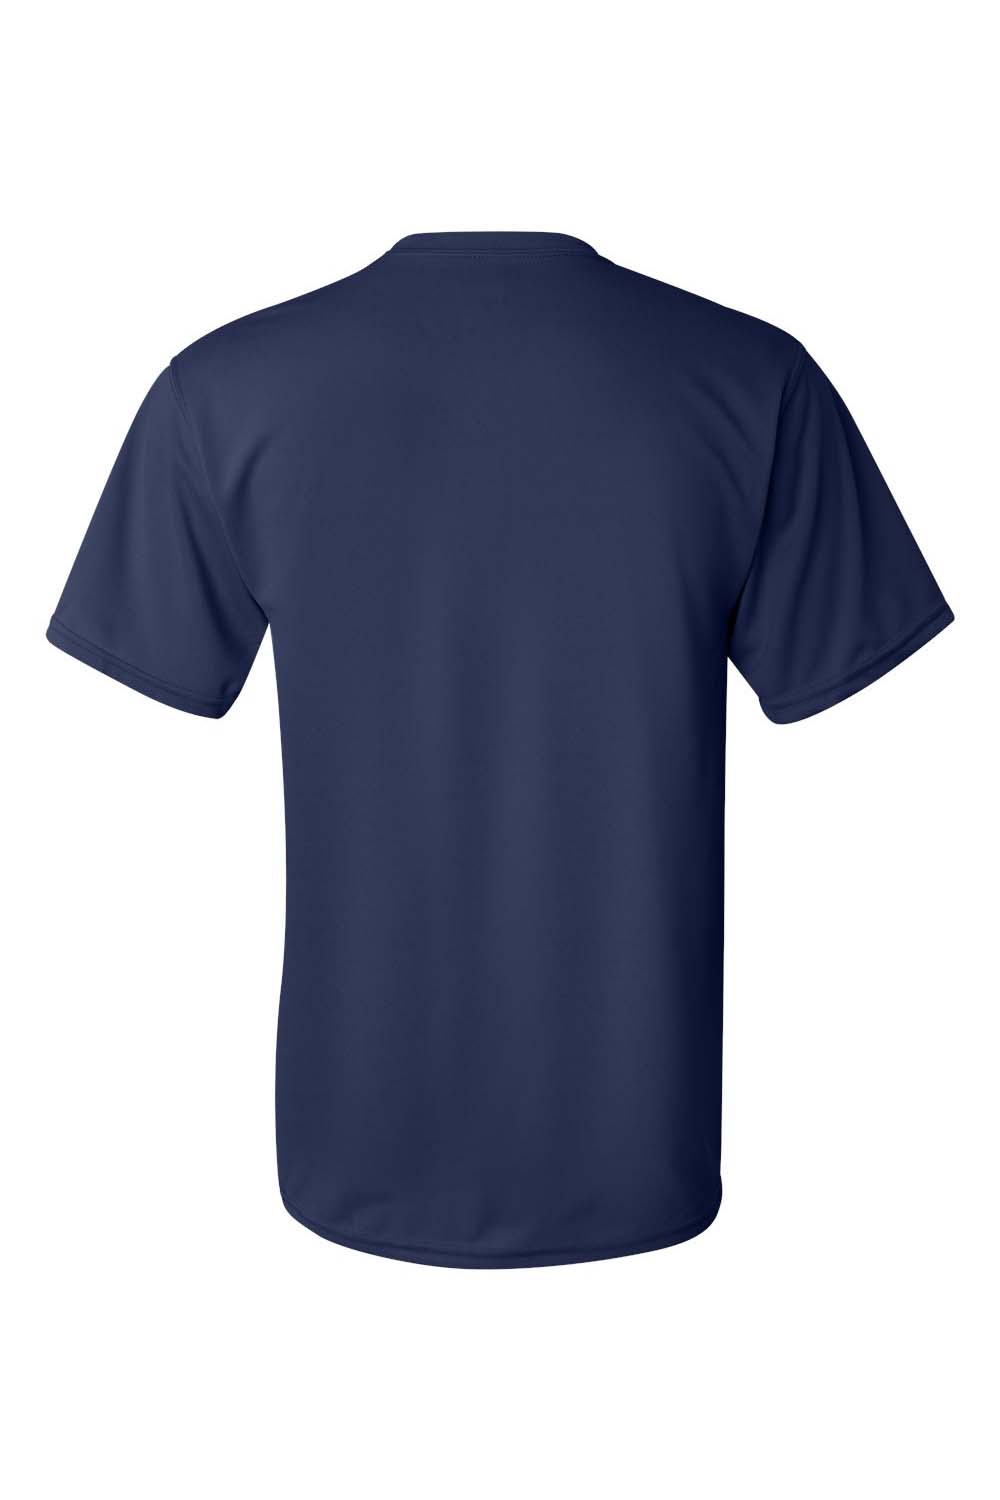 Augusta Sportswear 790 Mens Moisture Wicking Short Sleeve Crewneck T-Shirt Navy Blue Model Flat Back